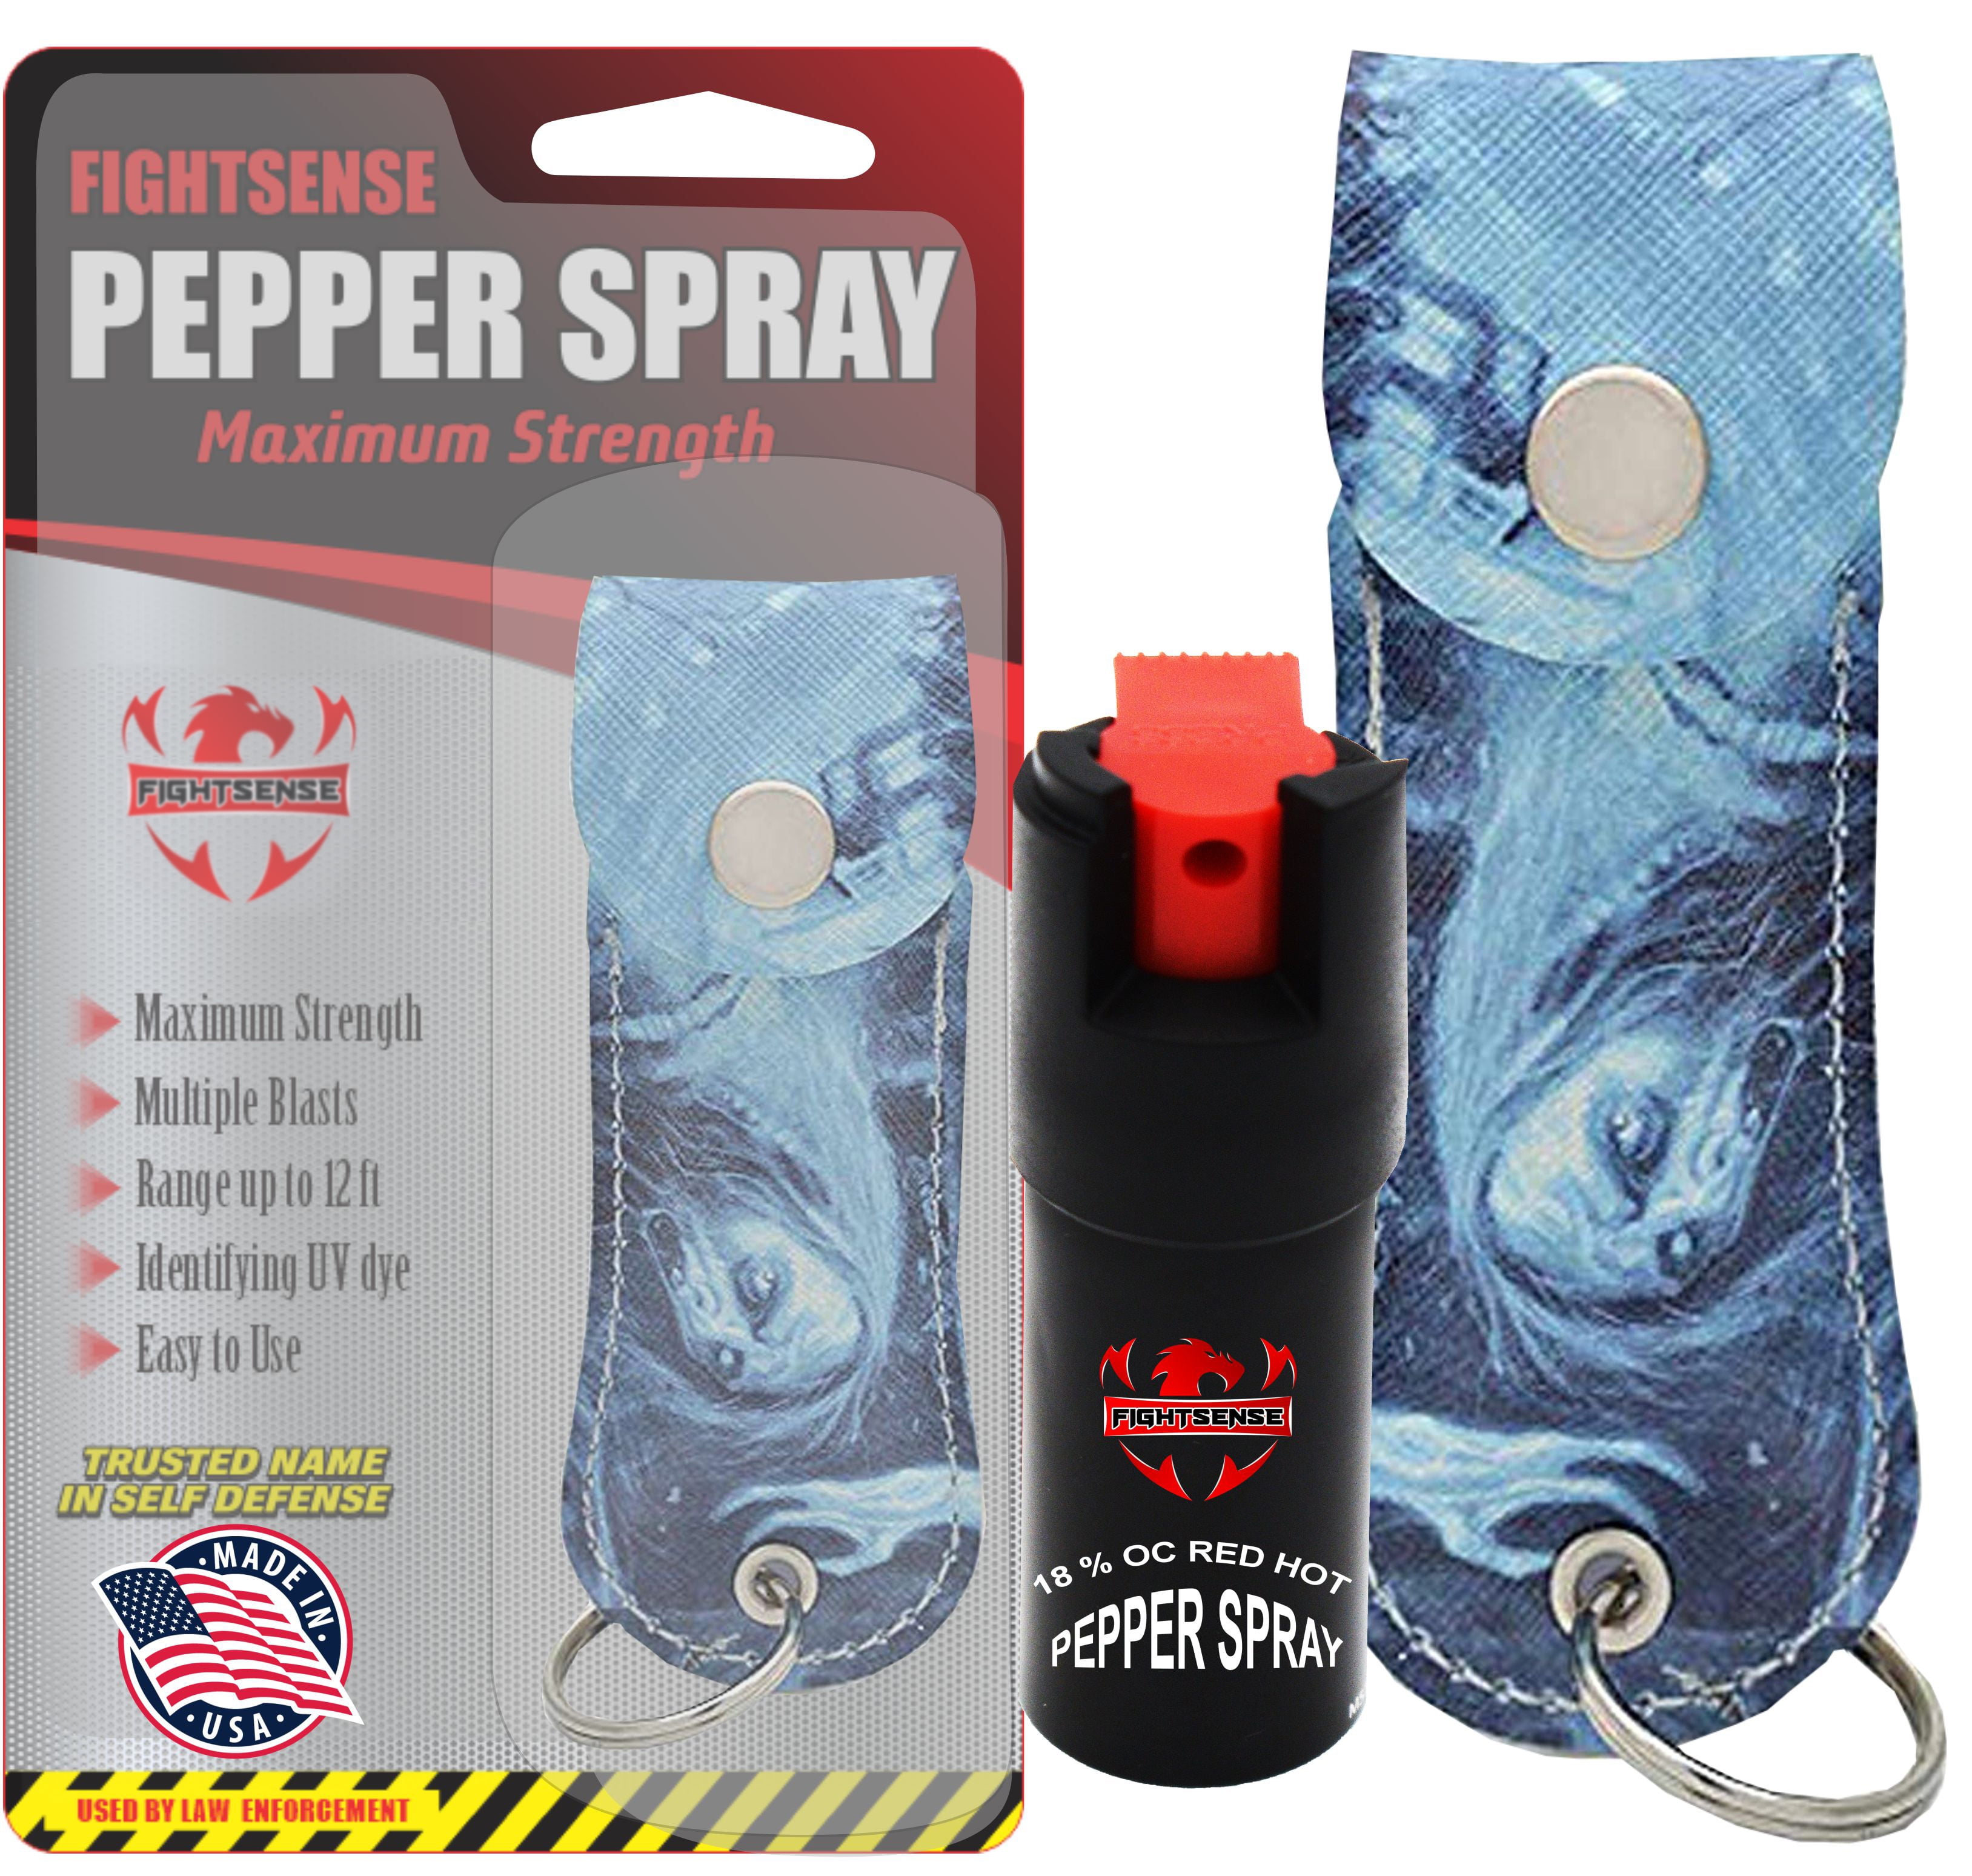 FIGHTSENSE Self Defense Pepper Spray - 1/2 oz Compact Size Maximum